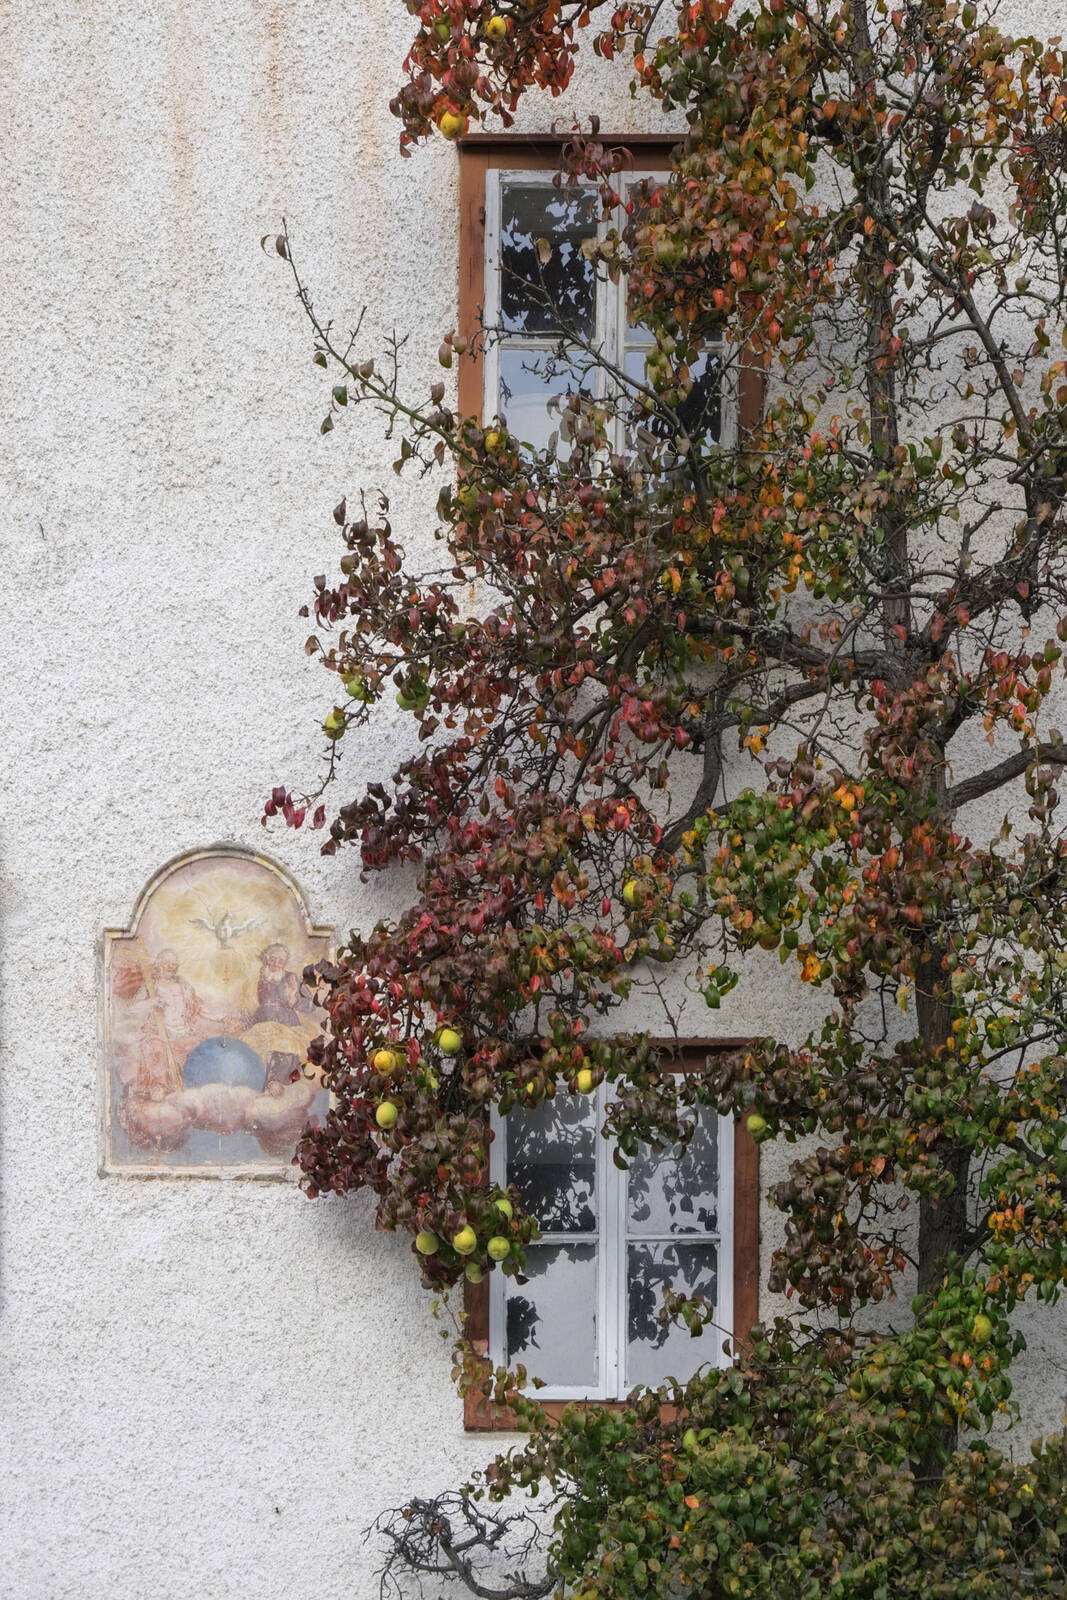 Image of Hallstatt village by Luka Esenko